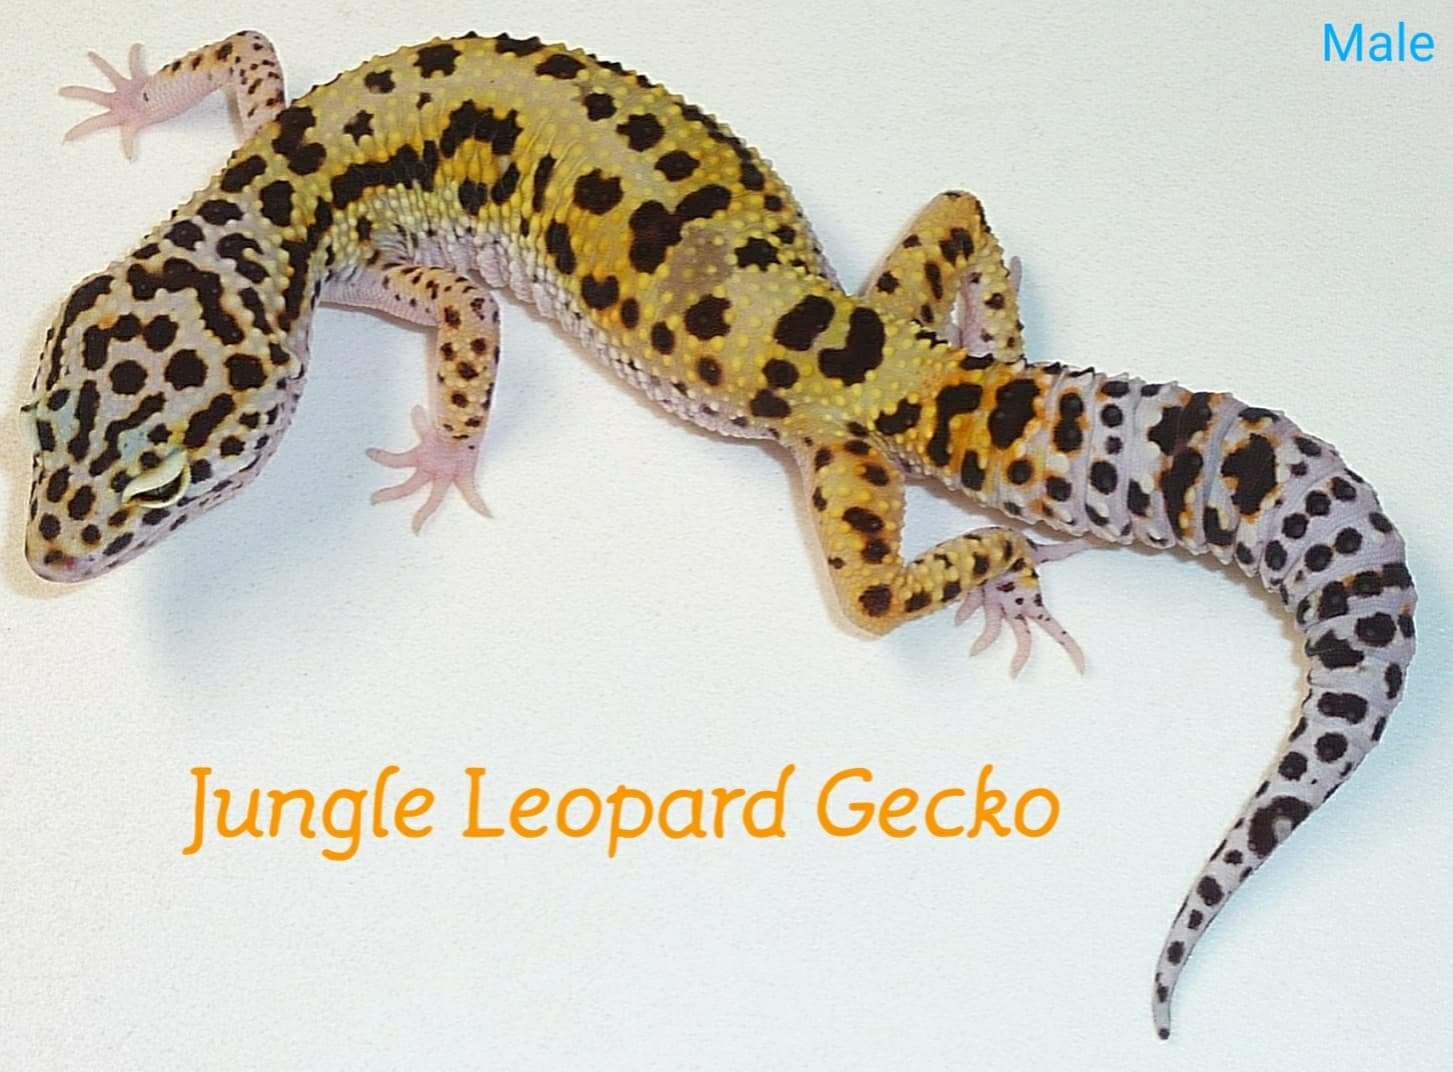 Jungle Leopard Gecko by HGH Reptiles